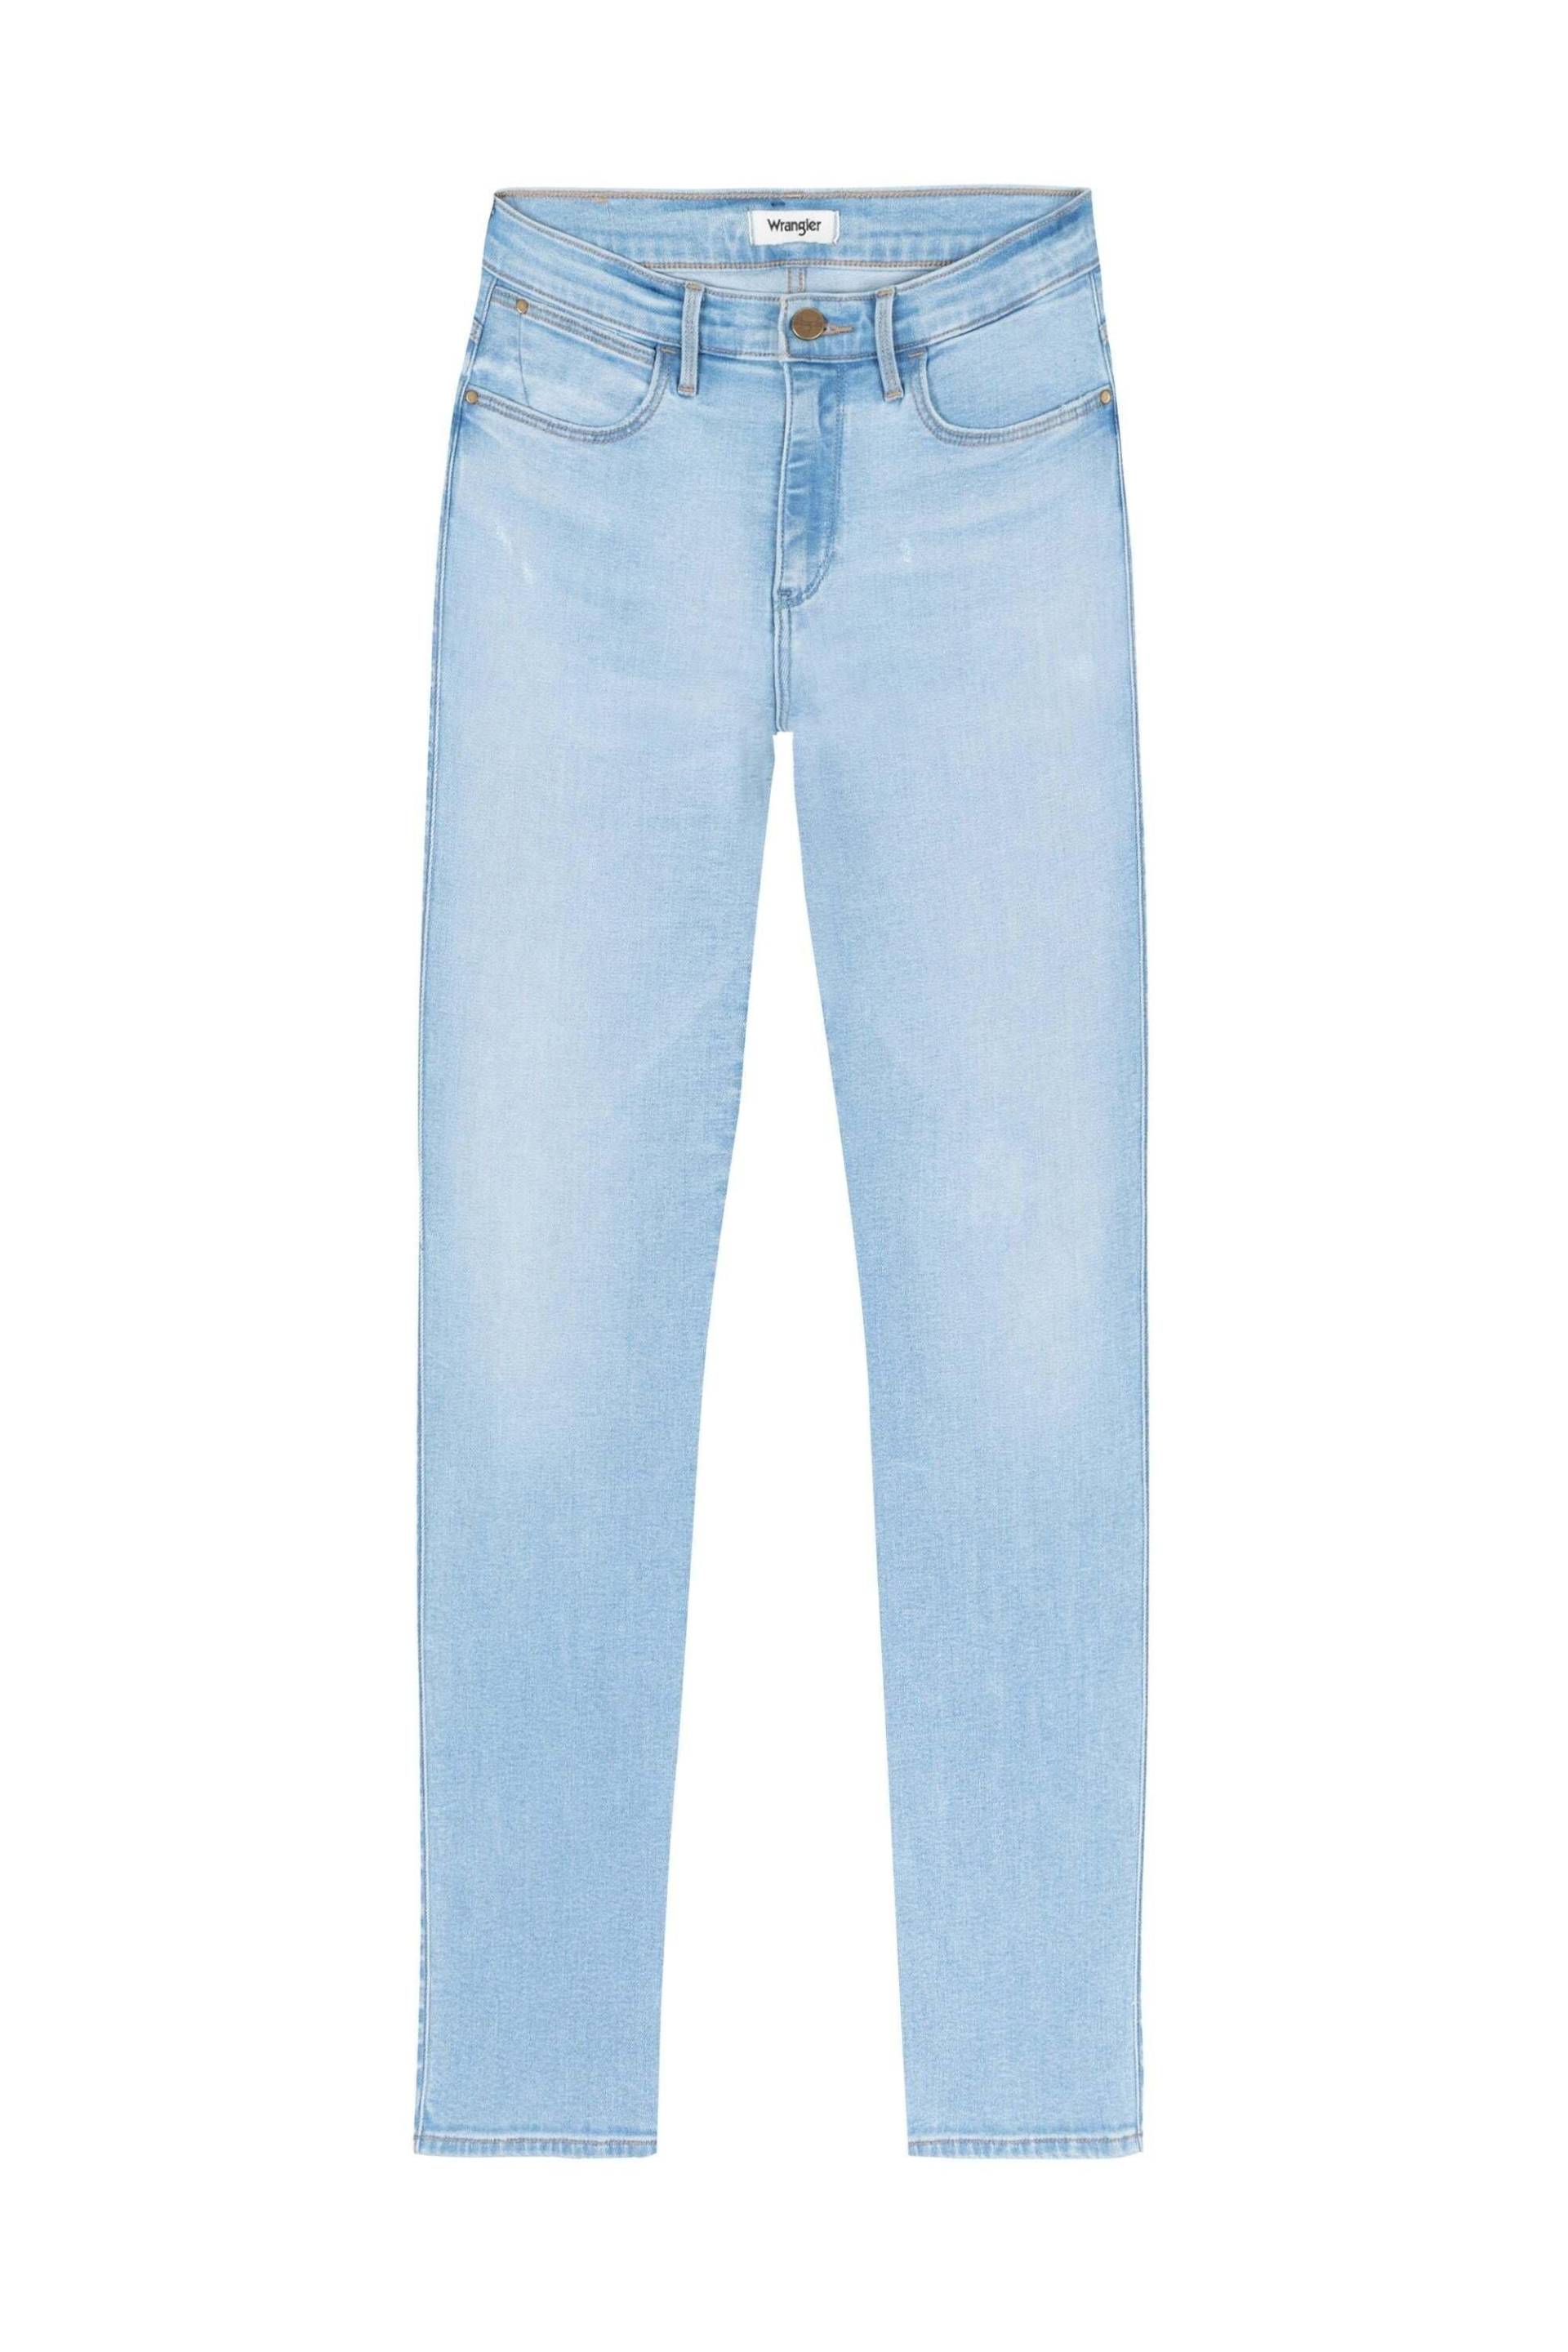 Jeans High Skinny Damen Blau L32/W25 von Wrangler